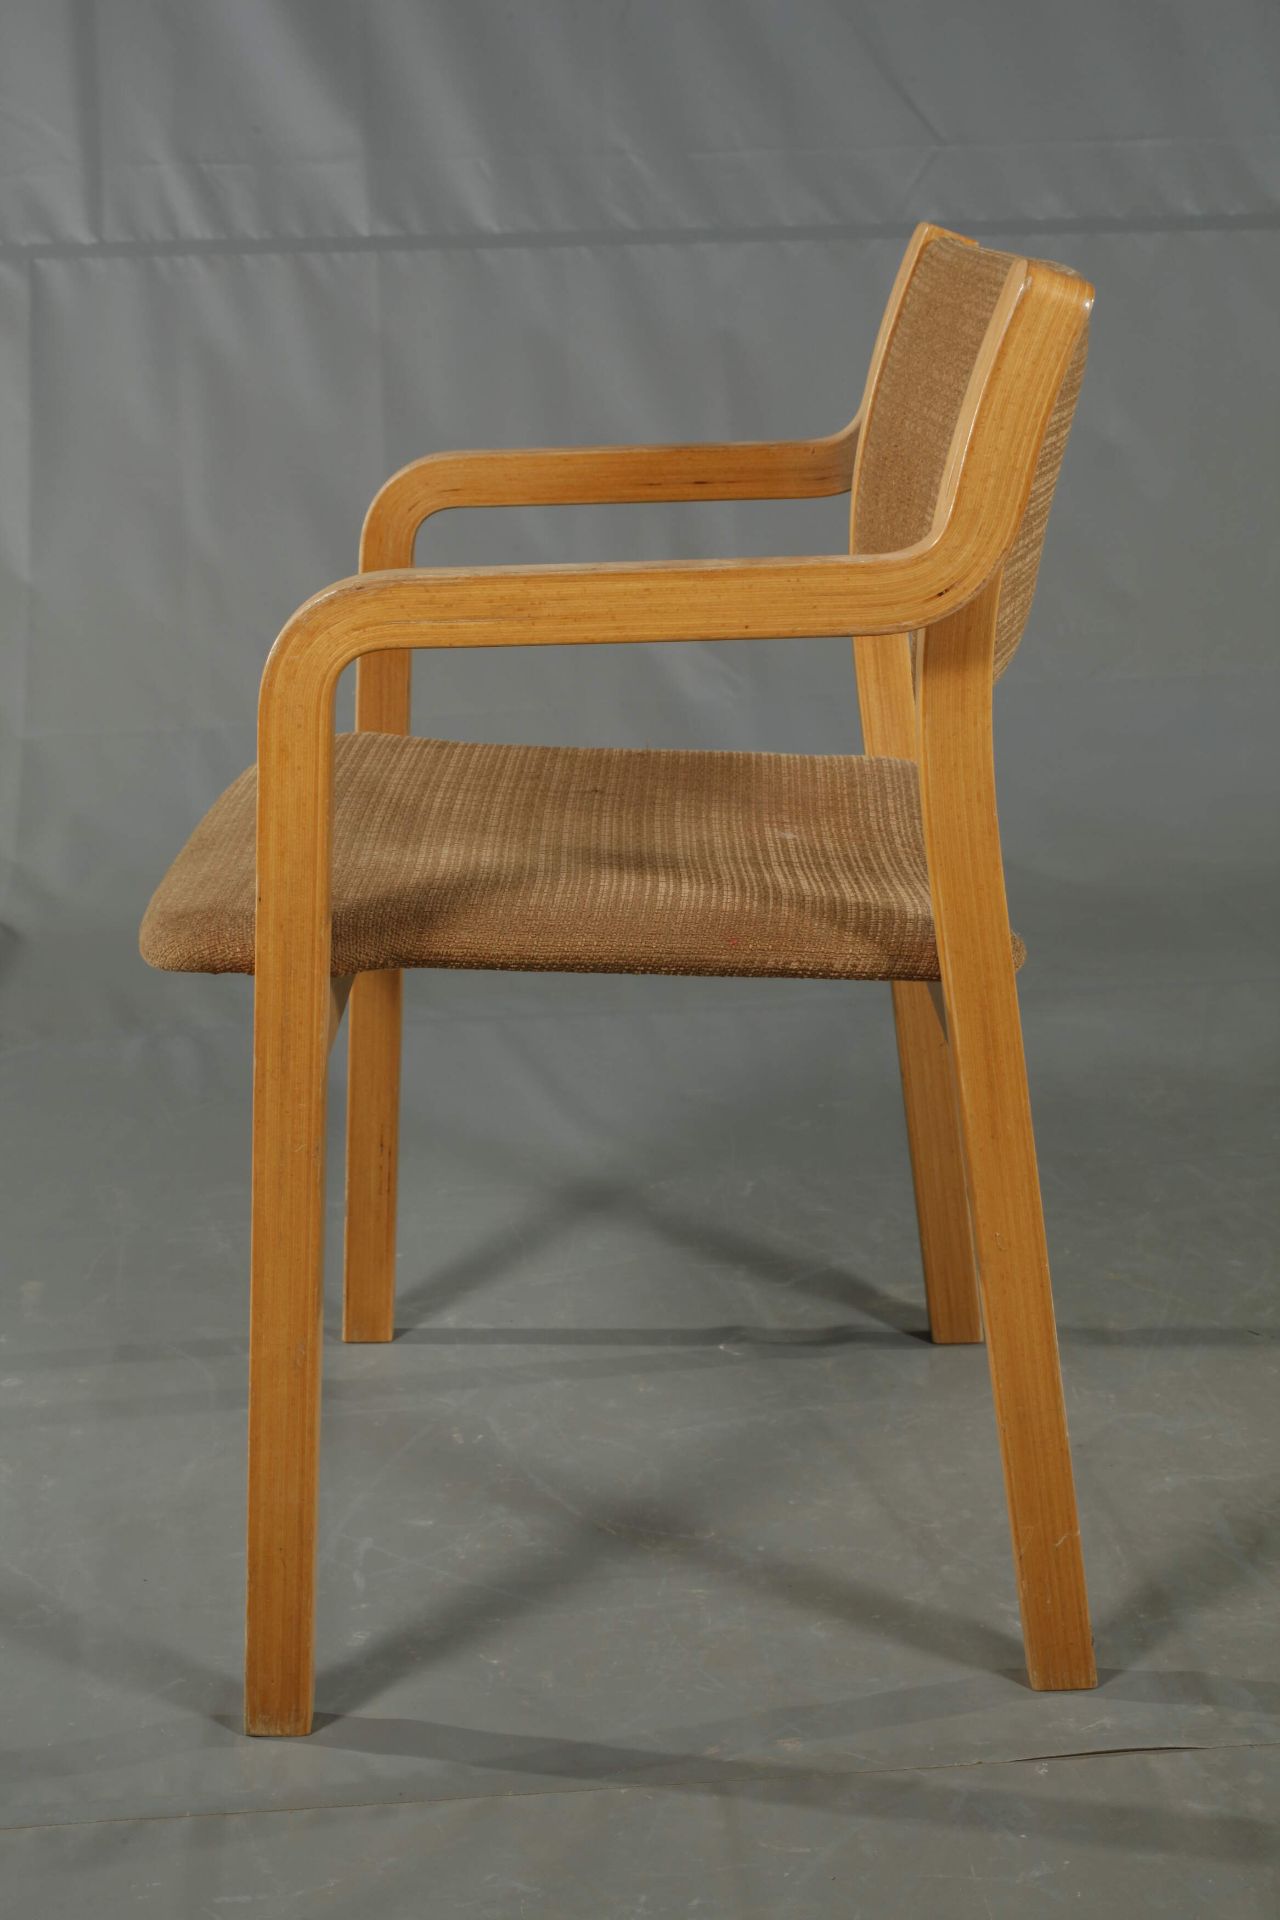 Three chairs Denmark - Image 4 of 7